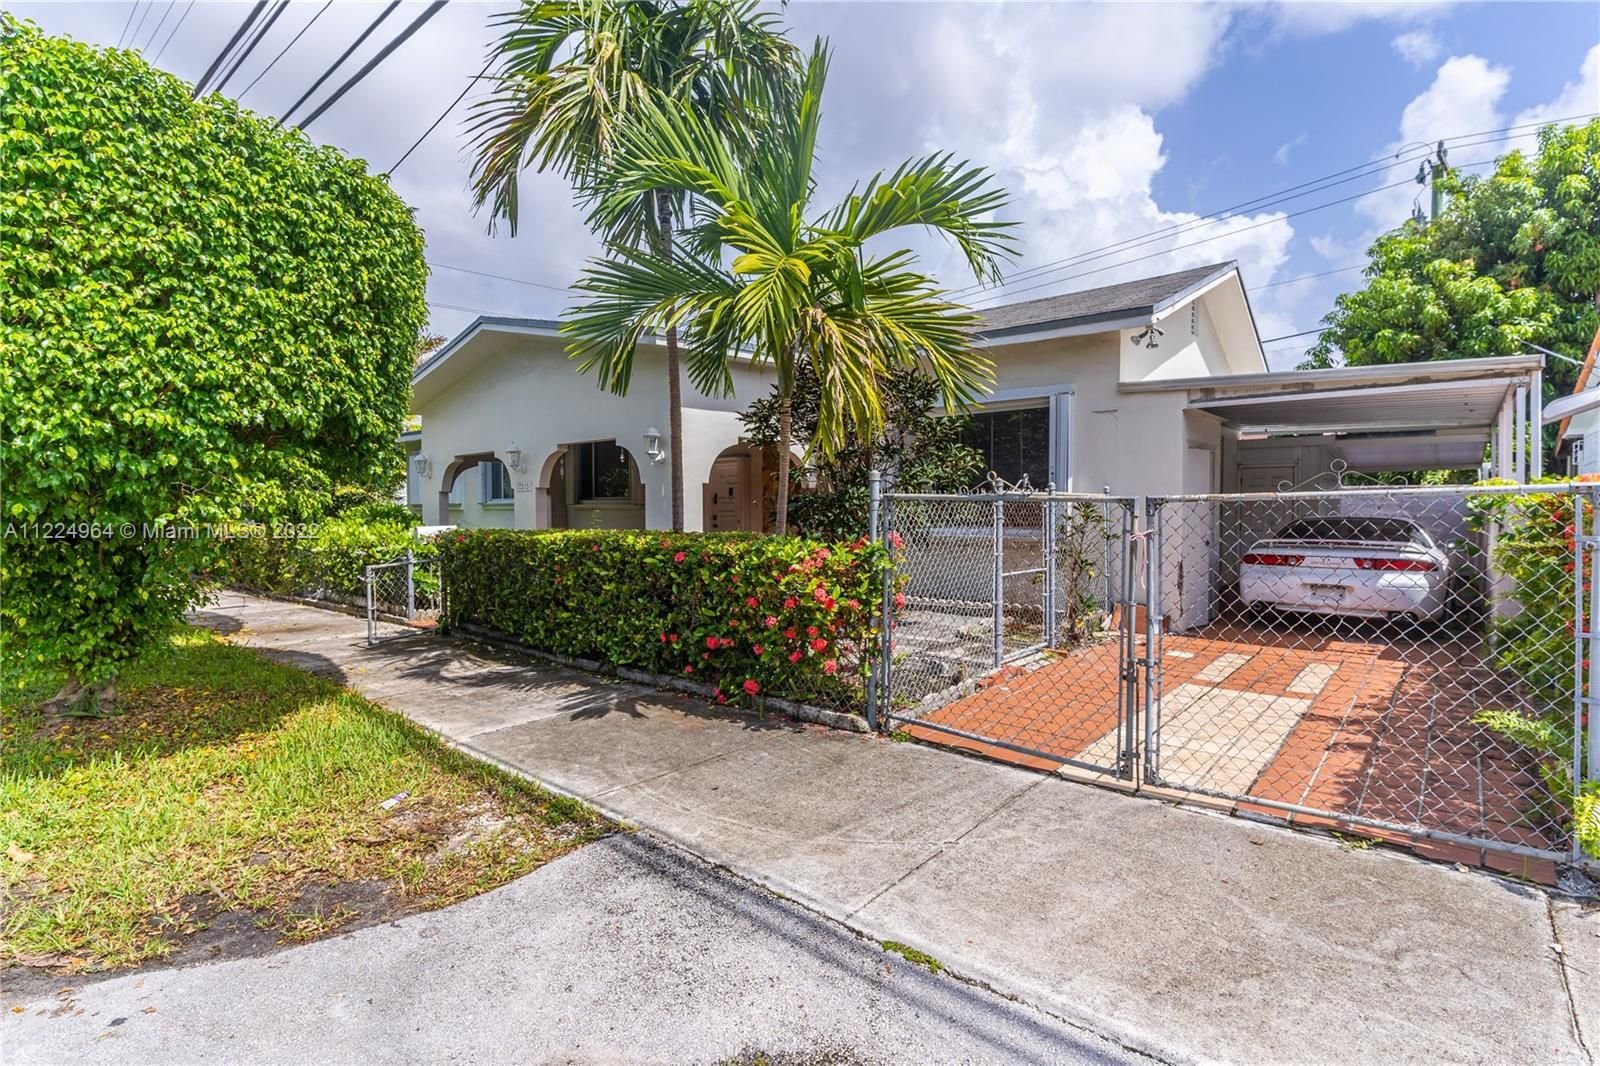 Real estate property located at 2815 11th St, Miami-Dade County, Miami, FL